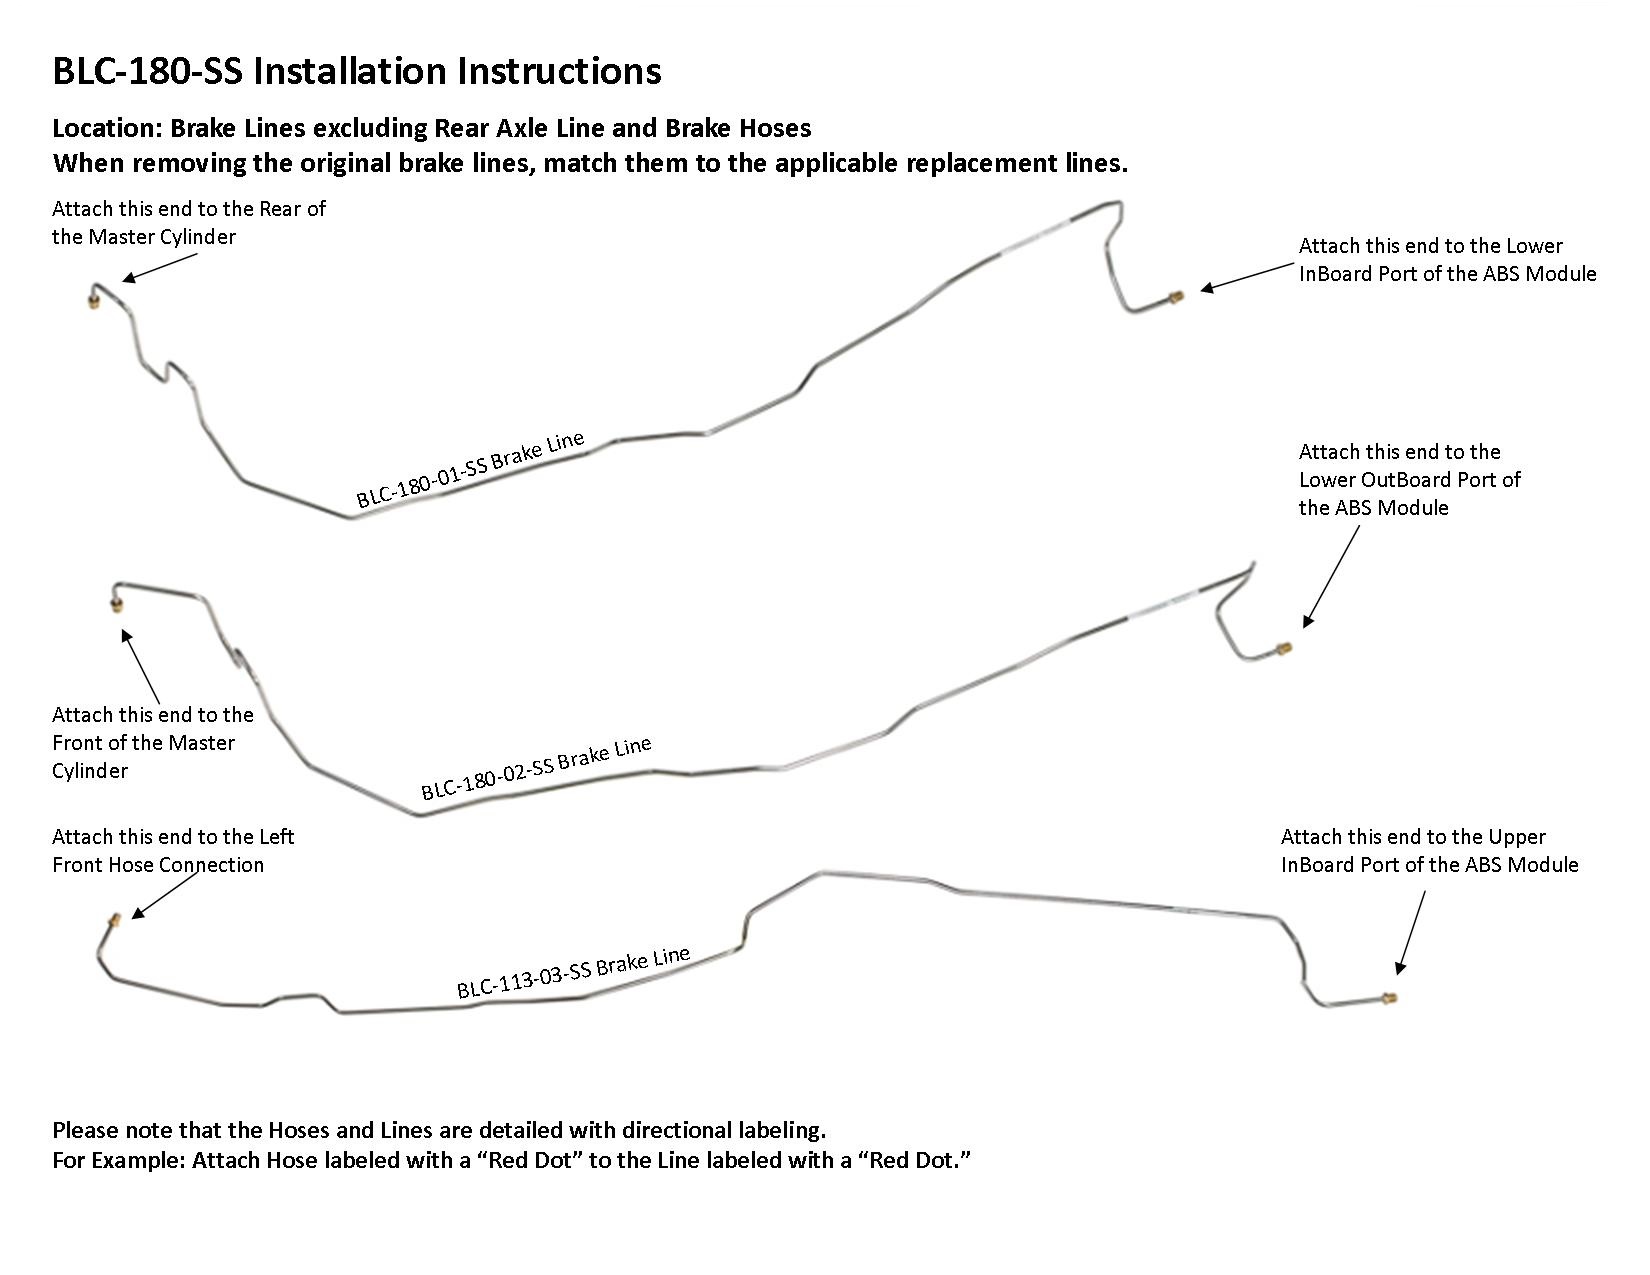 blc-180-ss-installation-instructions-updated.jpg